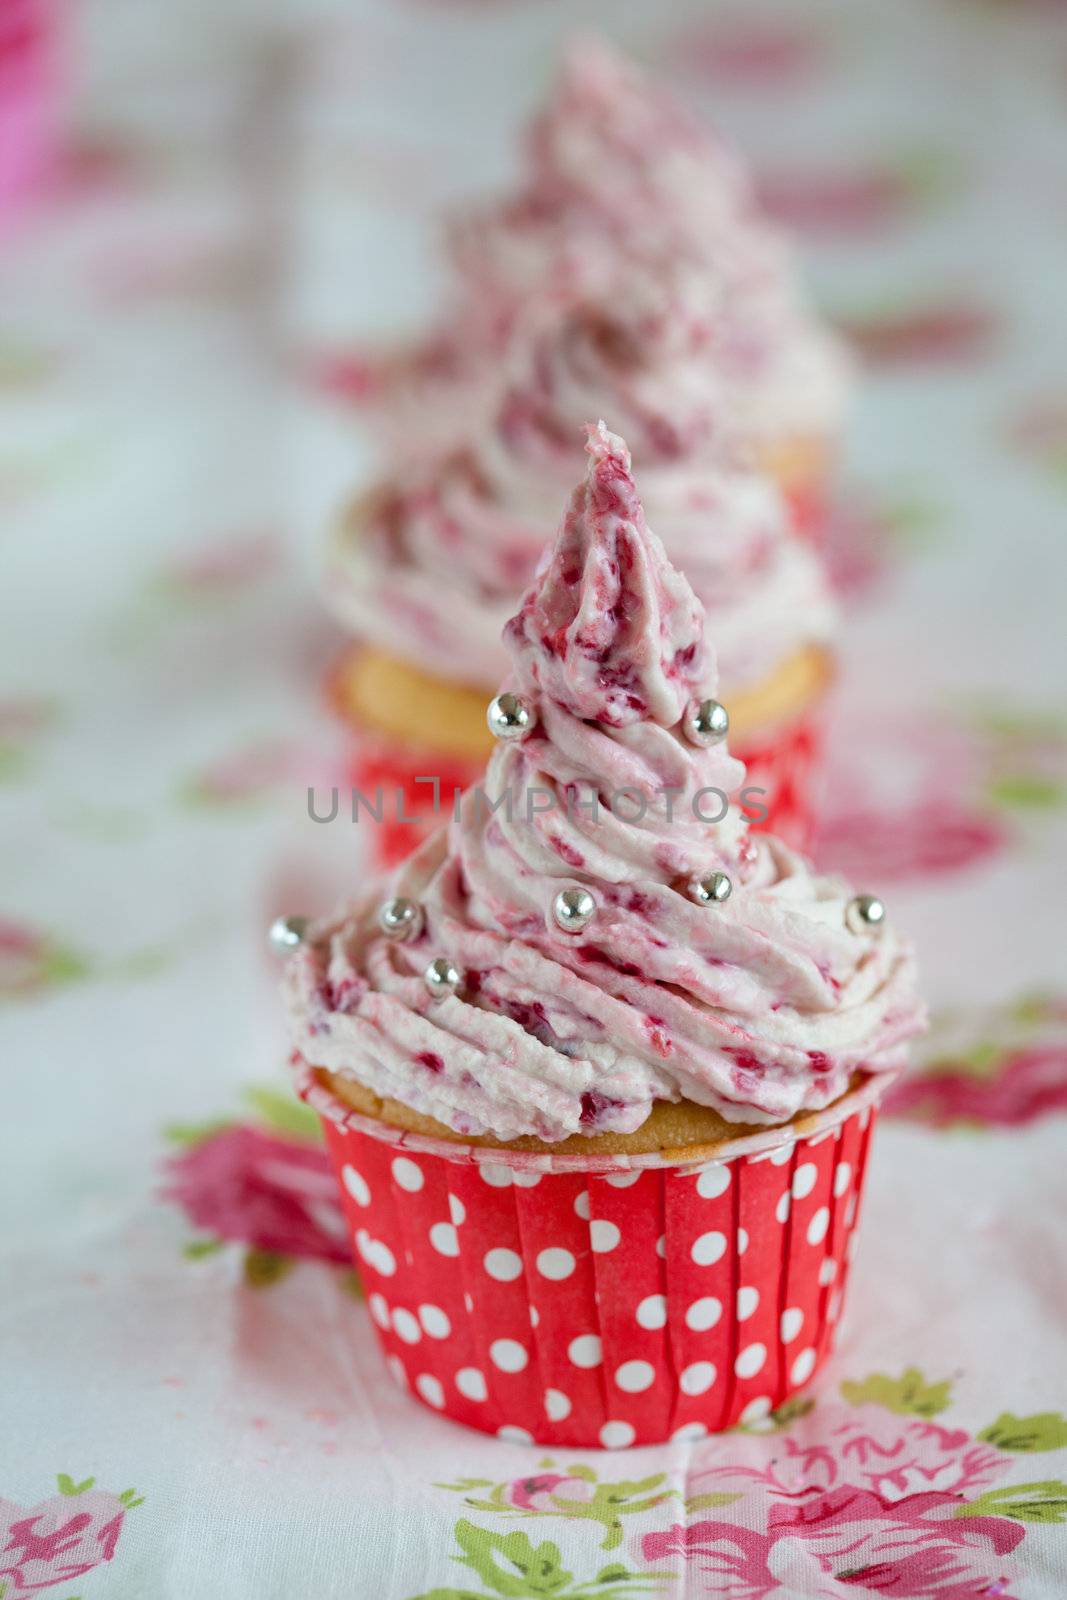 Festive cupcake by Fotosmurf